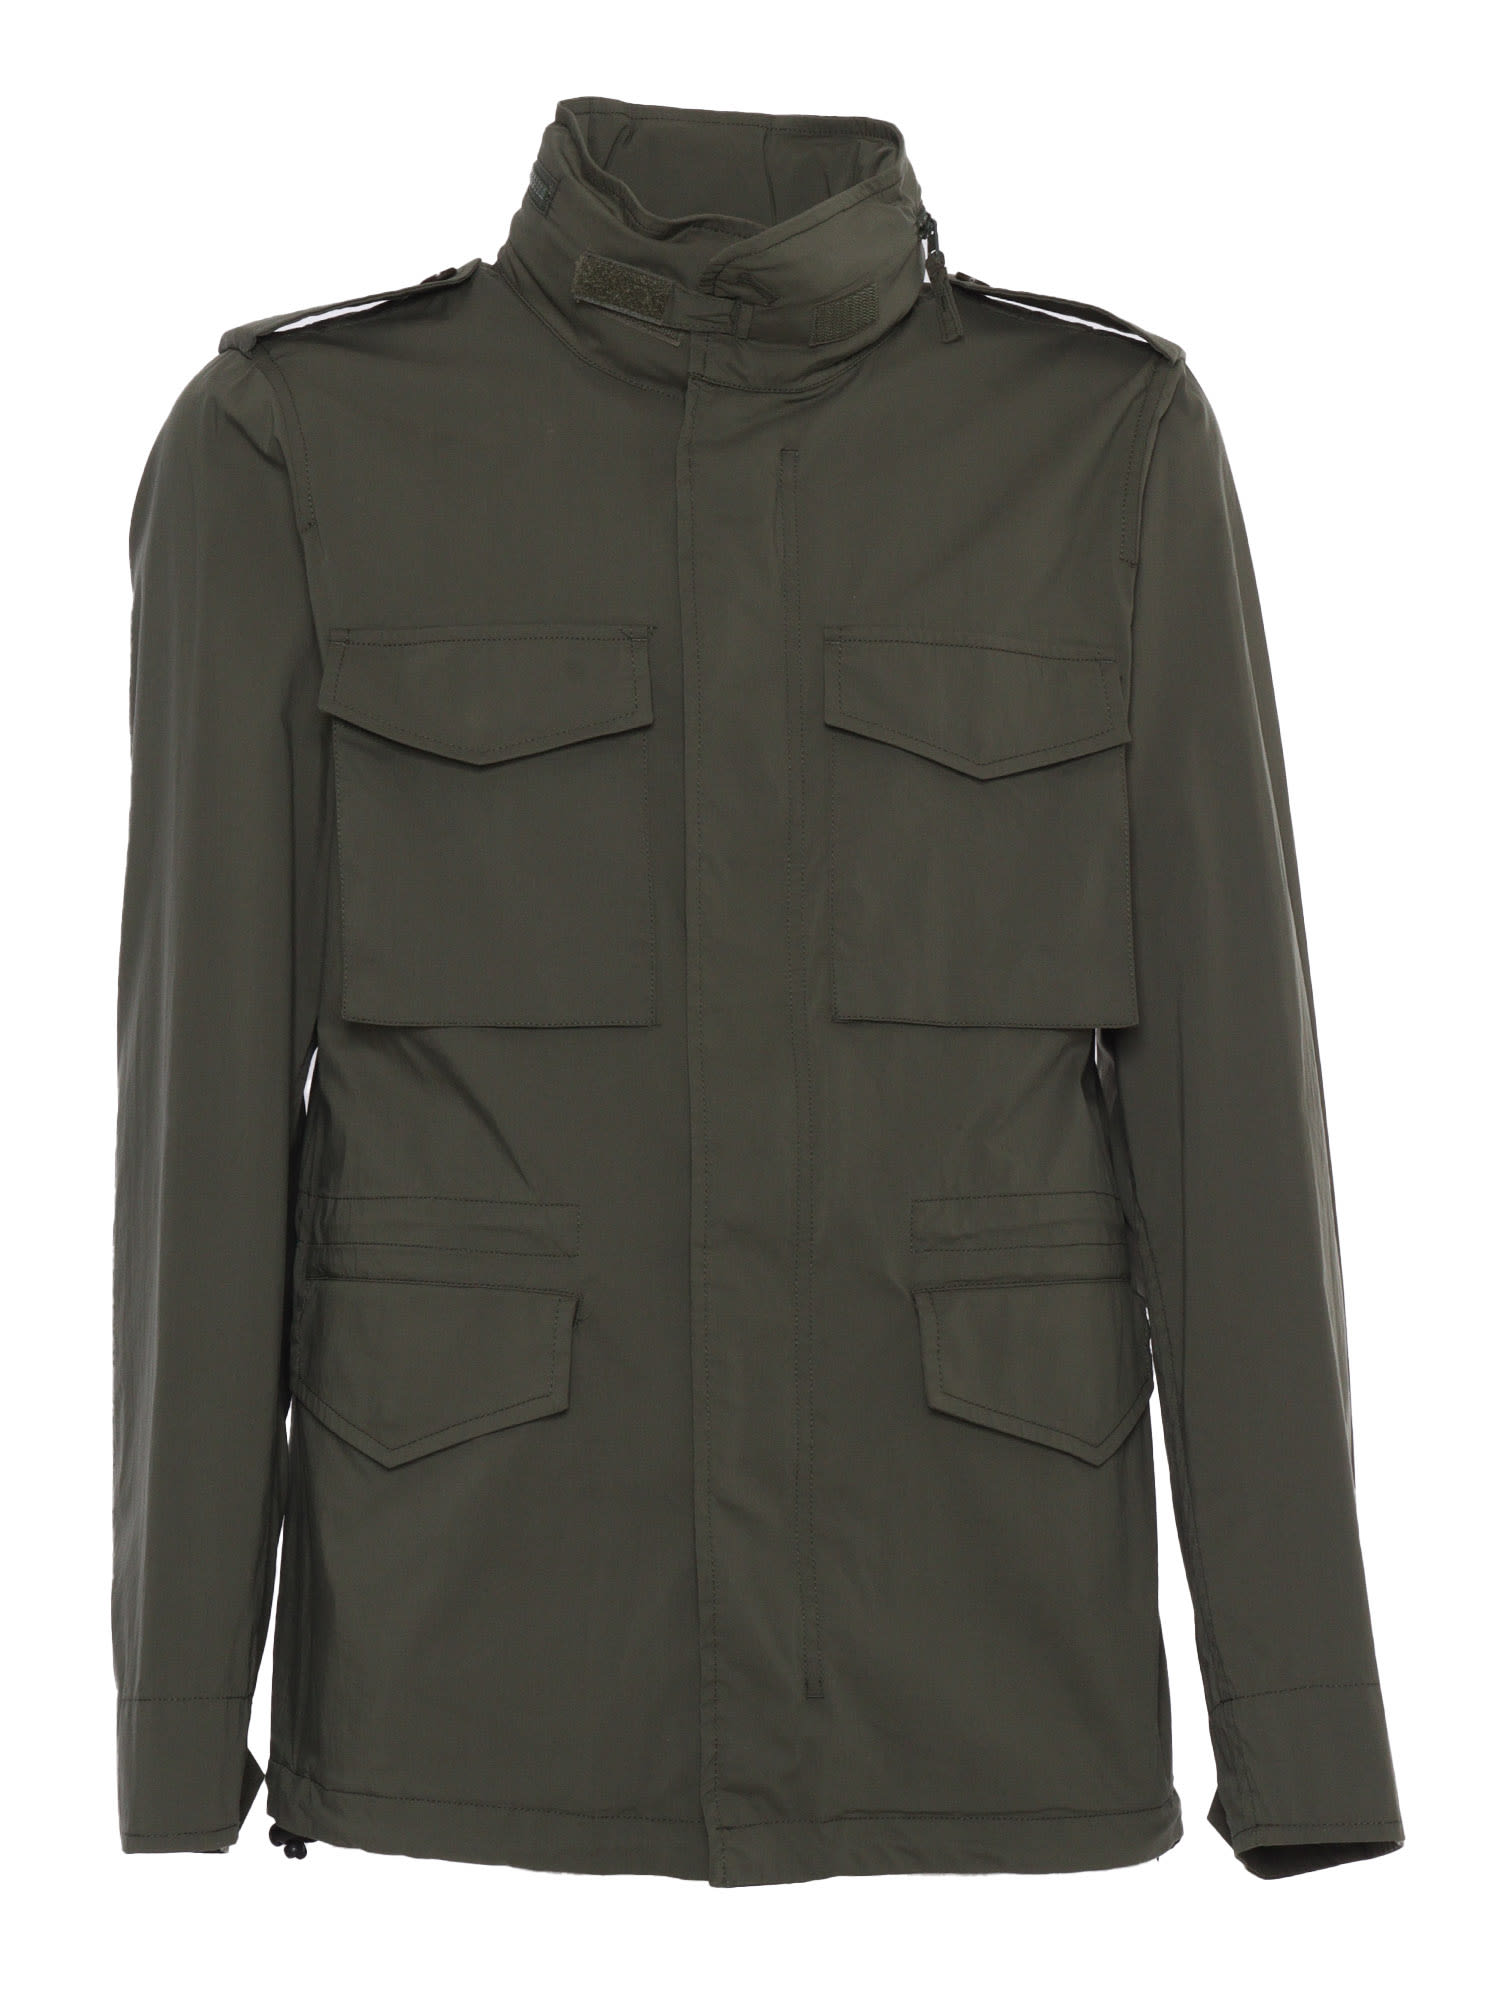 Aspesi Military Green Jacket With Pockets